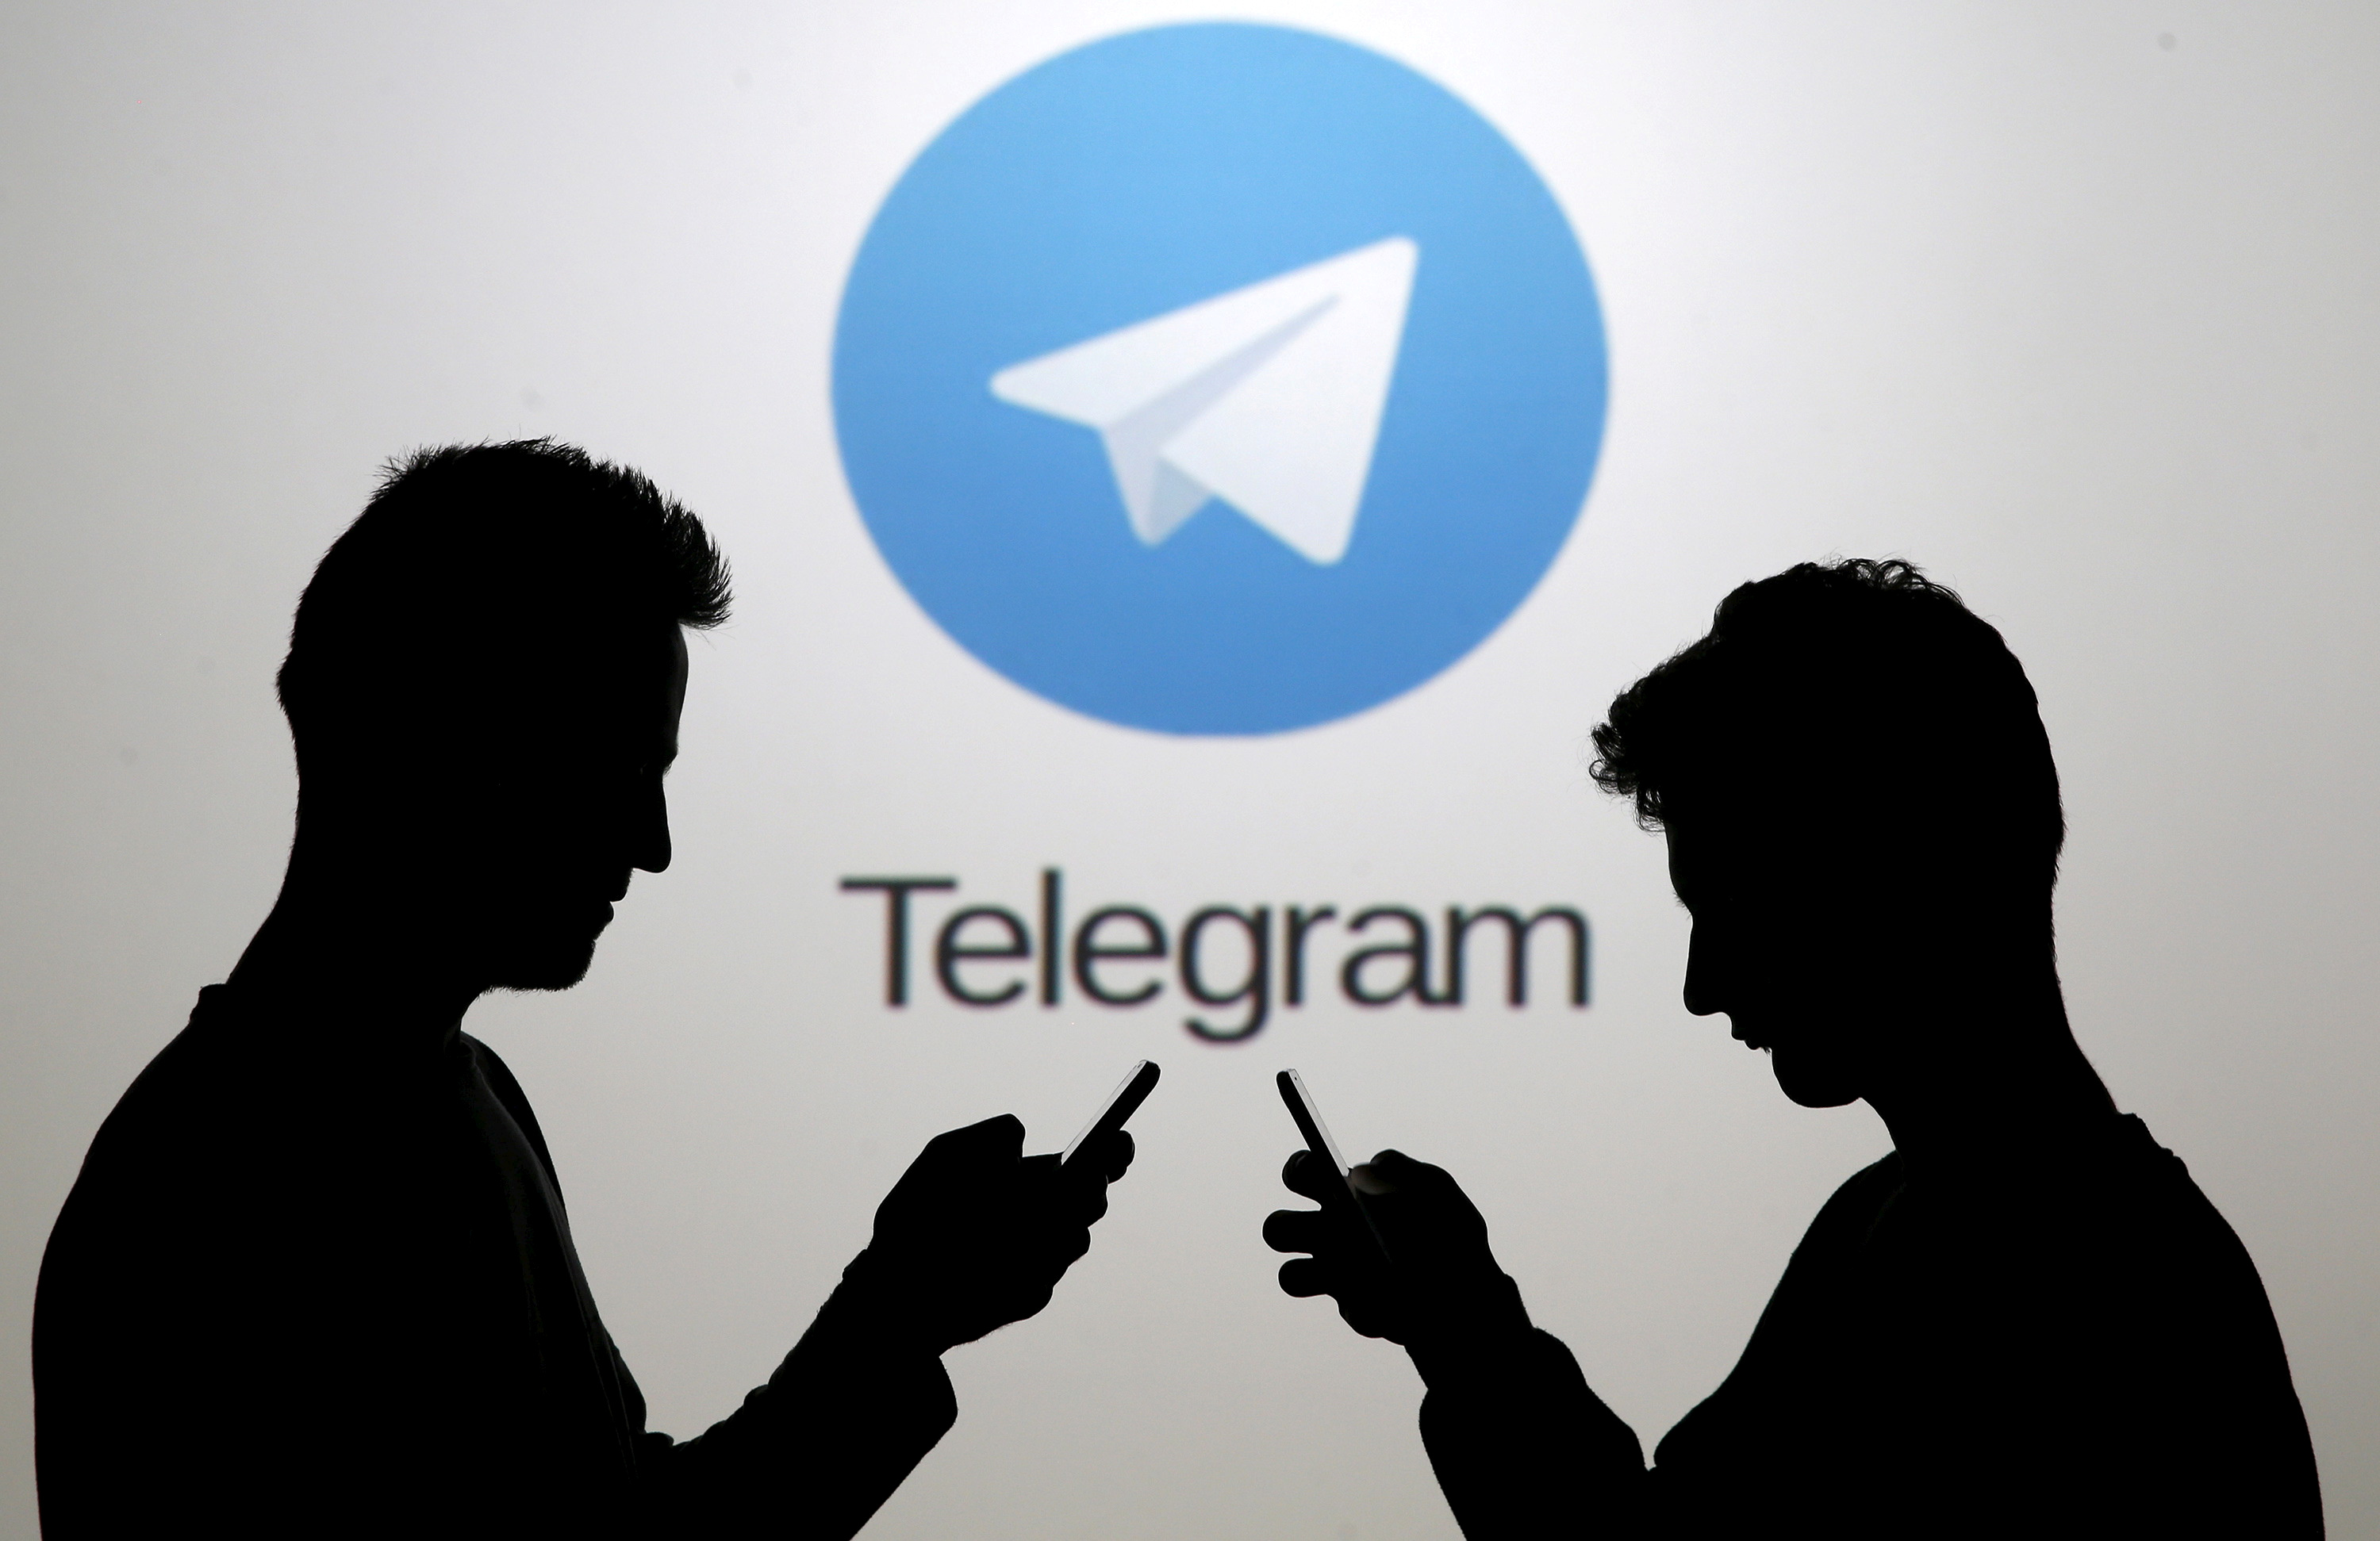   IP- Amazon - Telegram